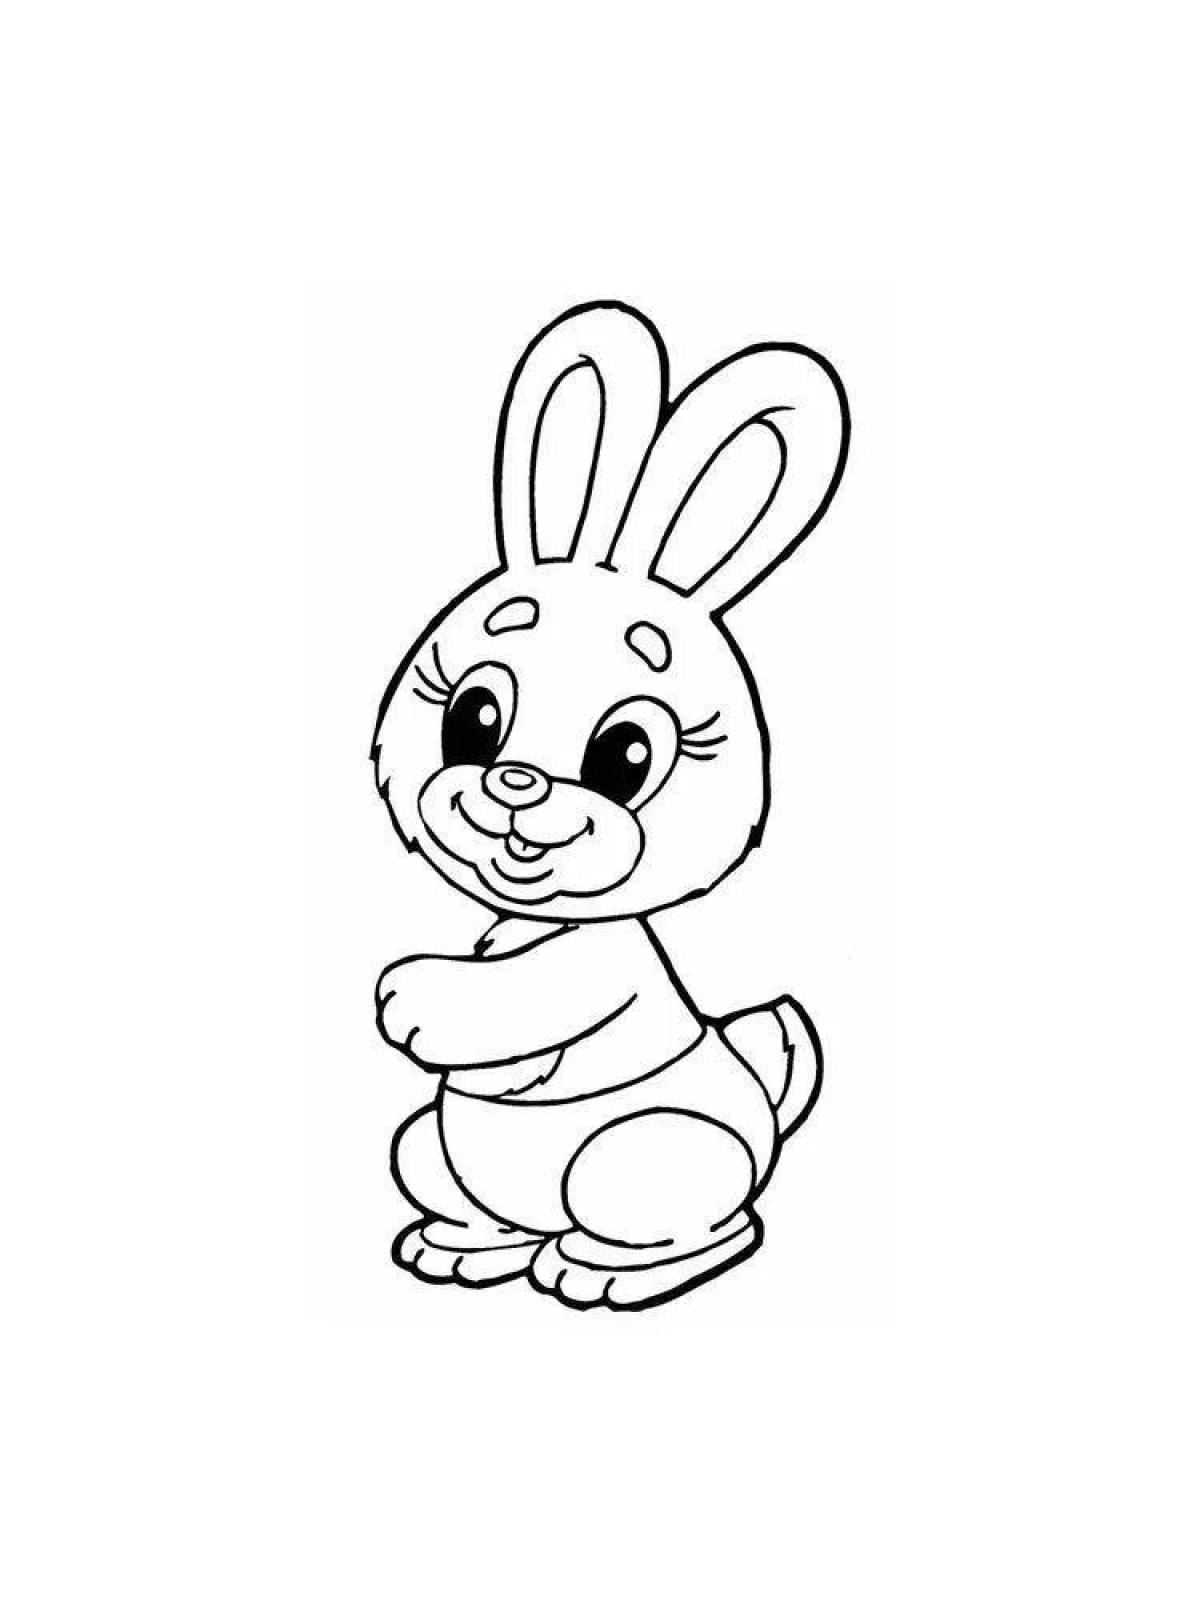 Adorable little rabbit coloring book